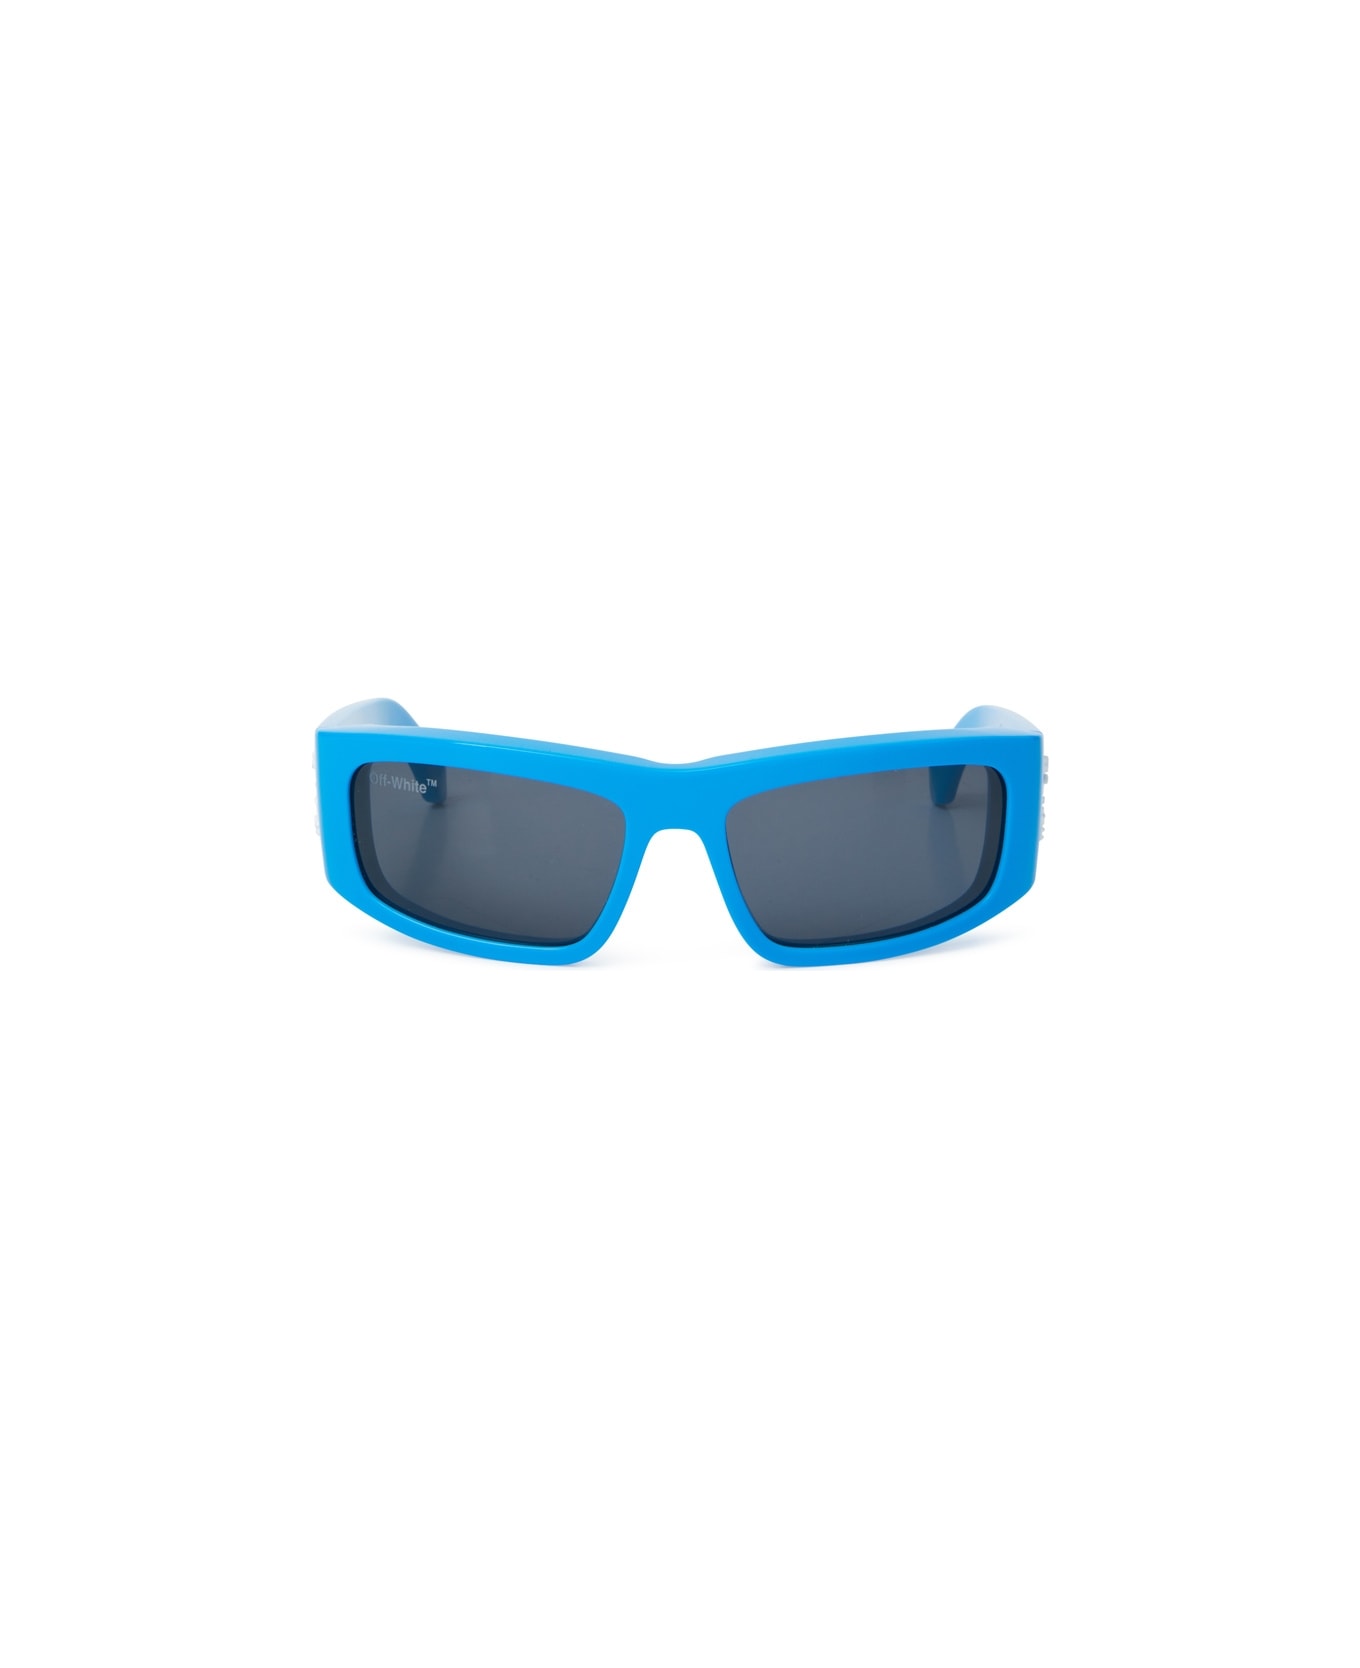 Off-White JOSEPH SUNGLASSES Sunglasses - Blue